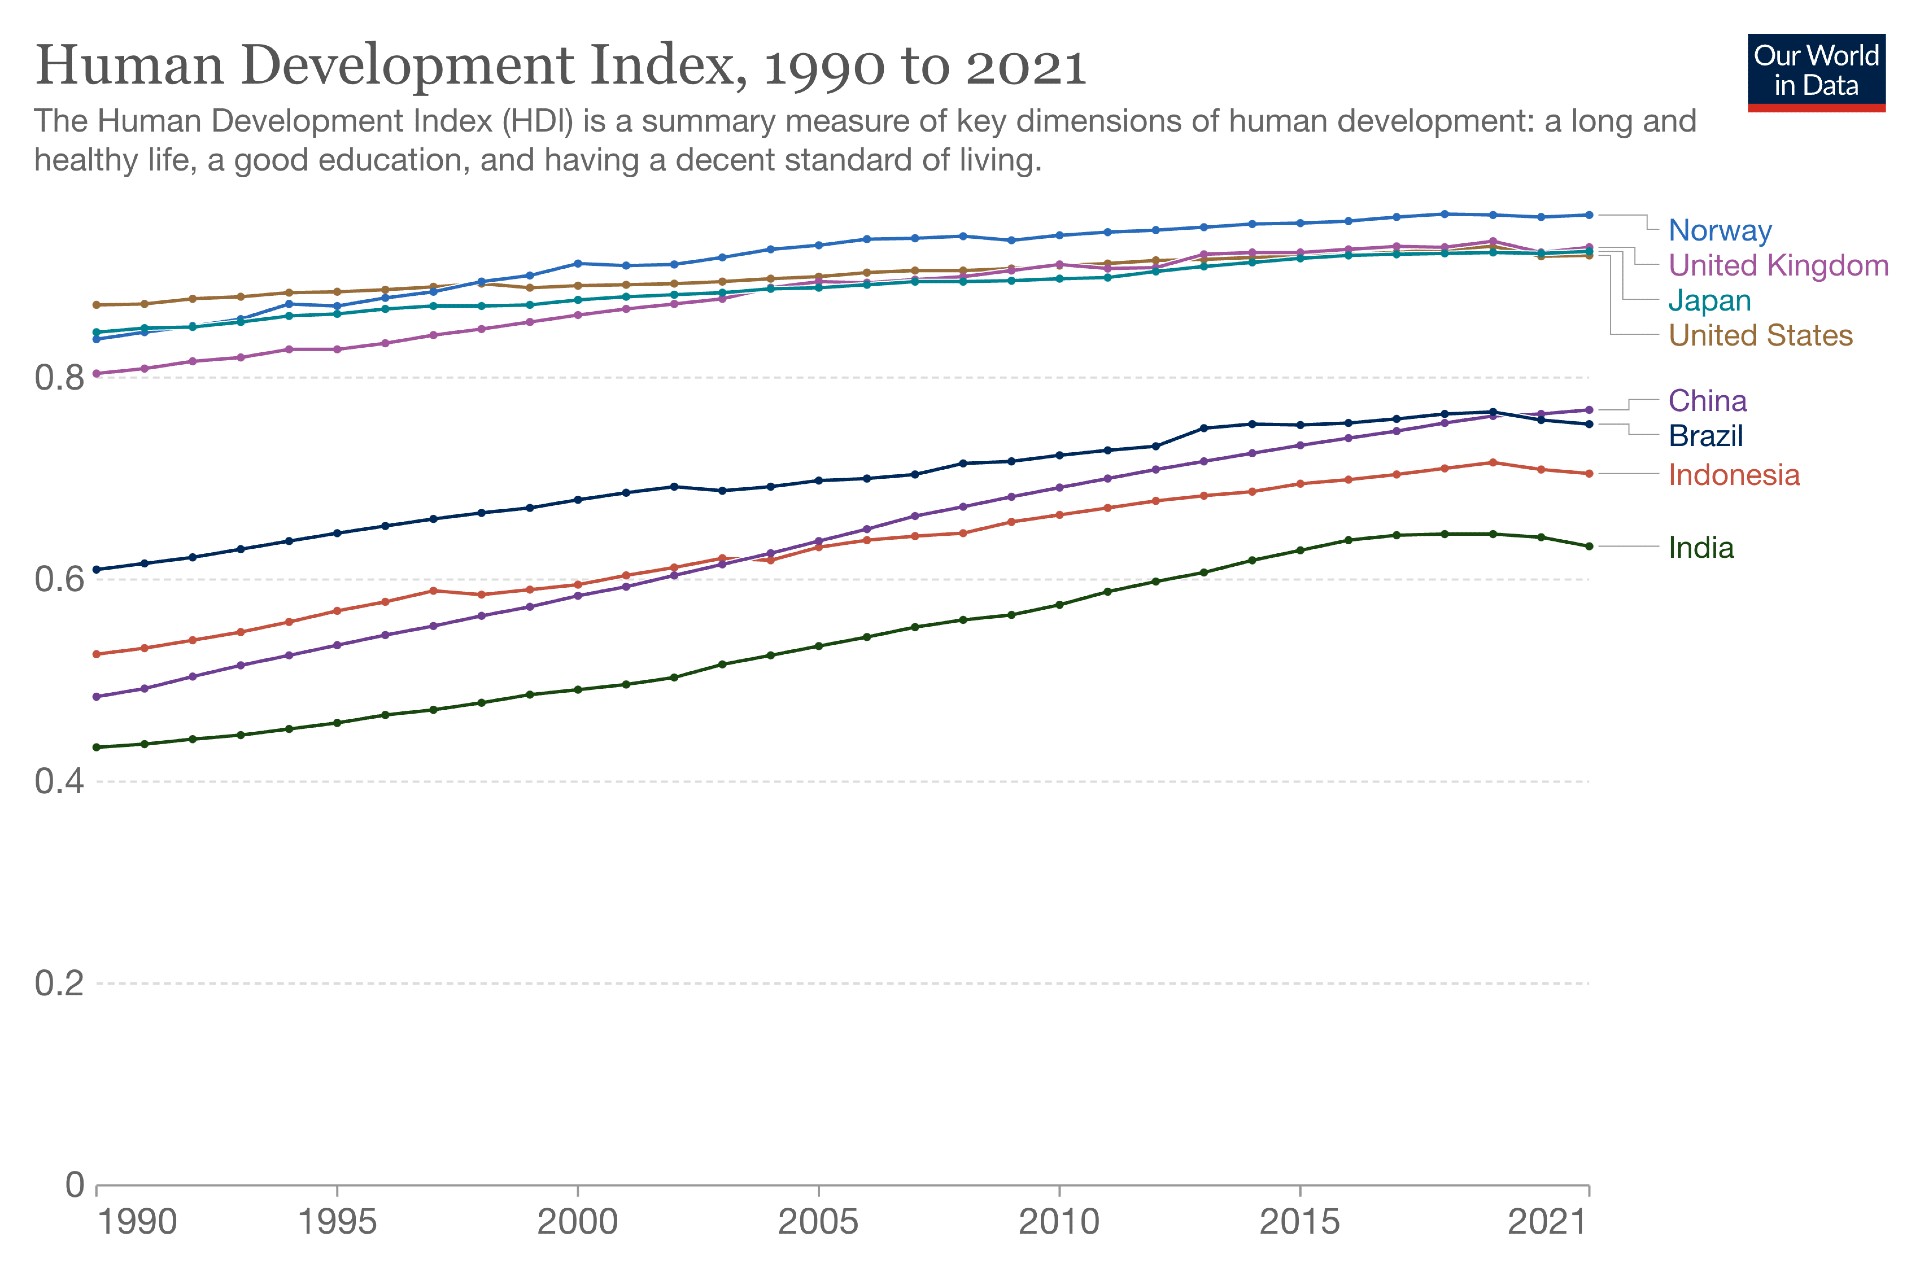 Grafik yang menunjukkan Indeks Pembangunan Manusia dari tahun 1990 hingga 2021 untuk berbagai negara.